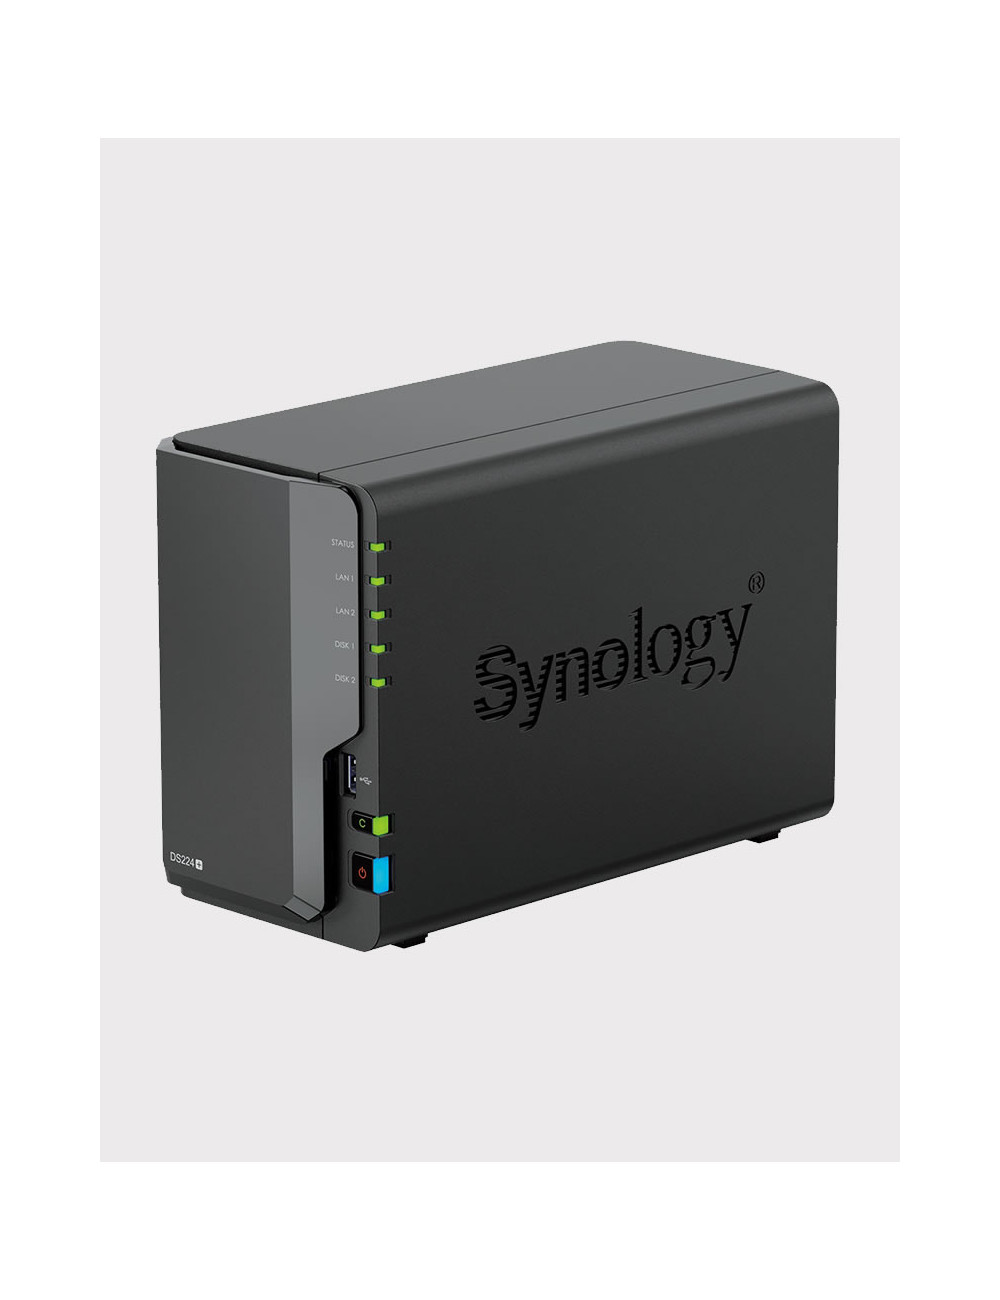 Synology DS218PLAY NAS Server WD BLUE 2TB (2x1TB)